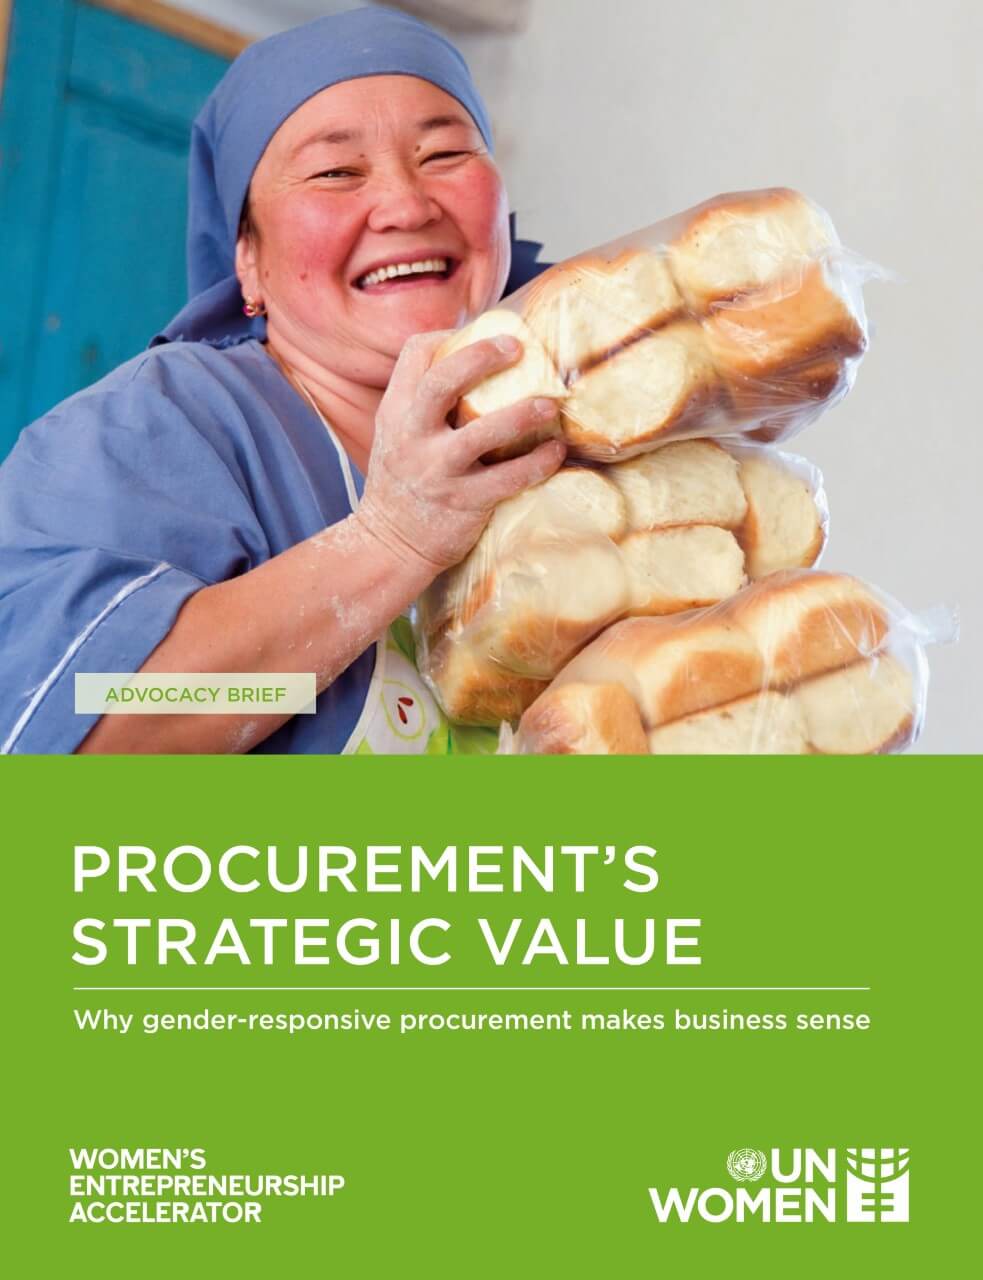 Procurement’s strategic value: Why gender-responsive procurement makes business sense